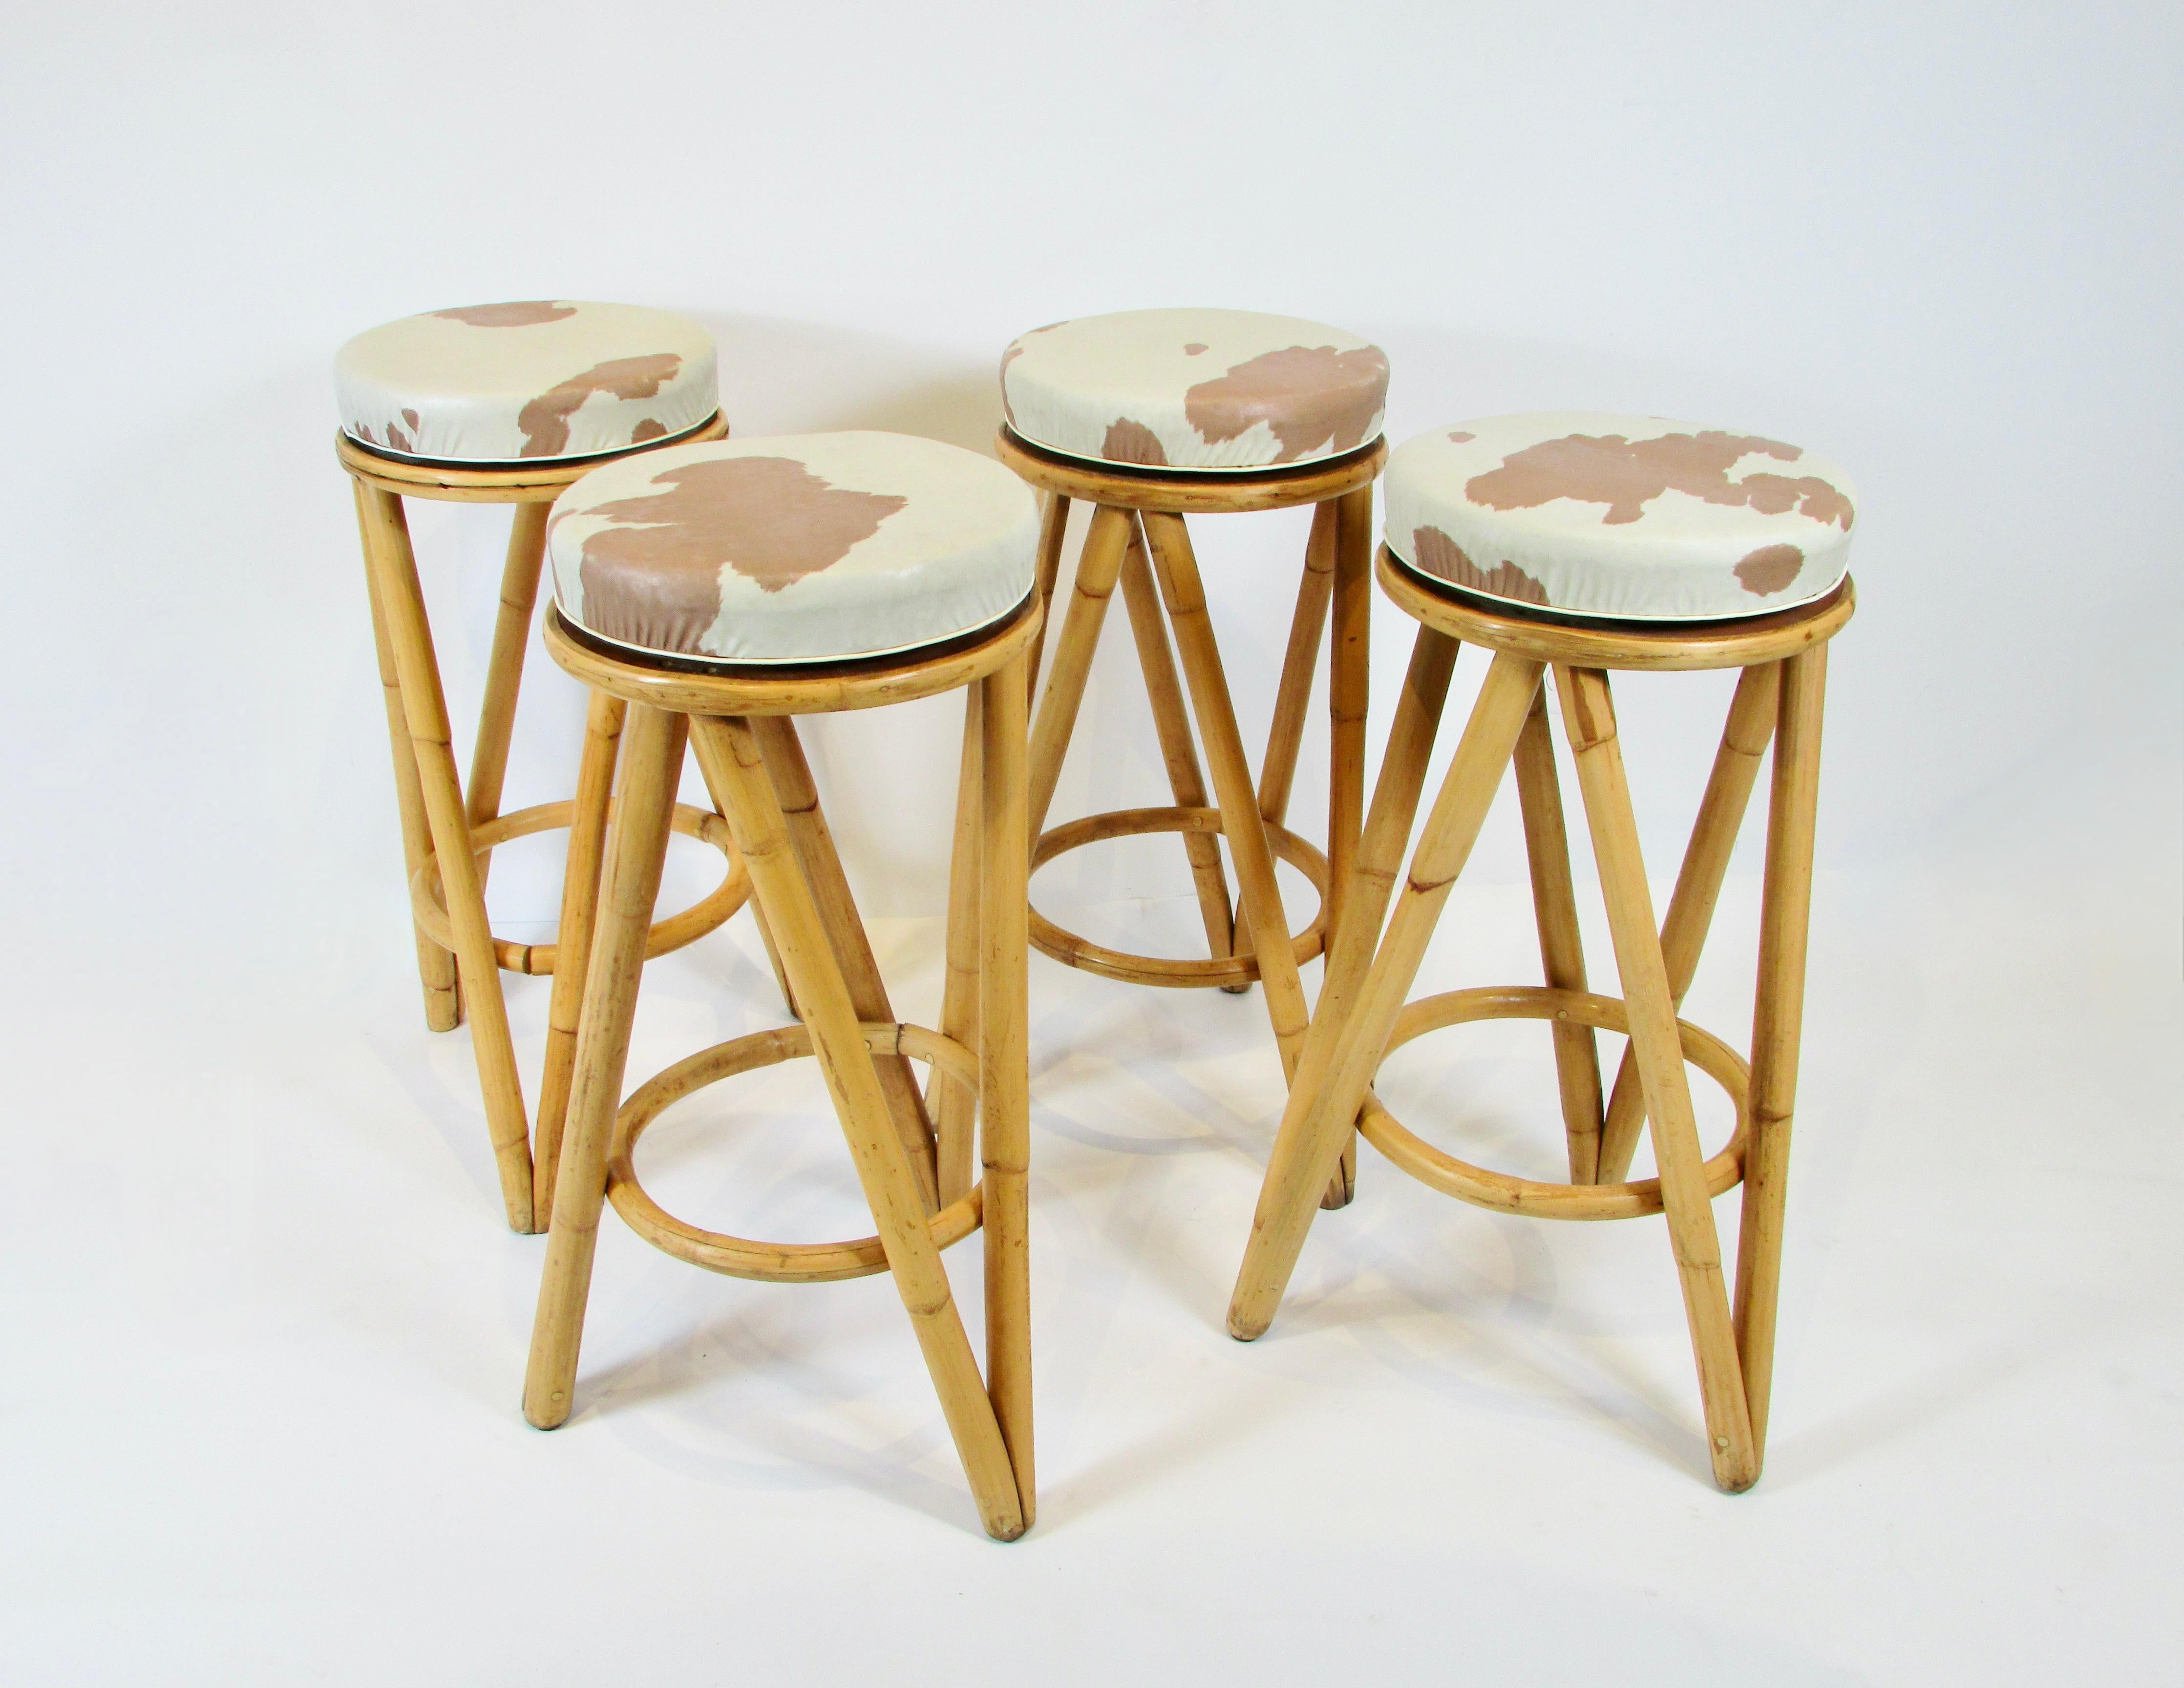 carved tiki bar stools for sale